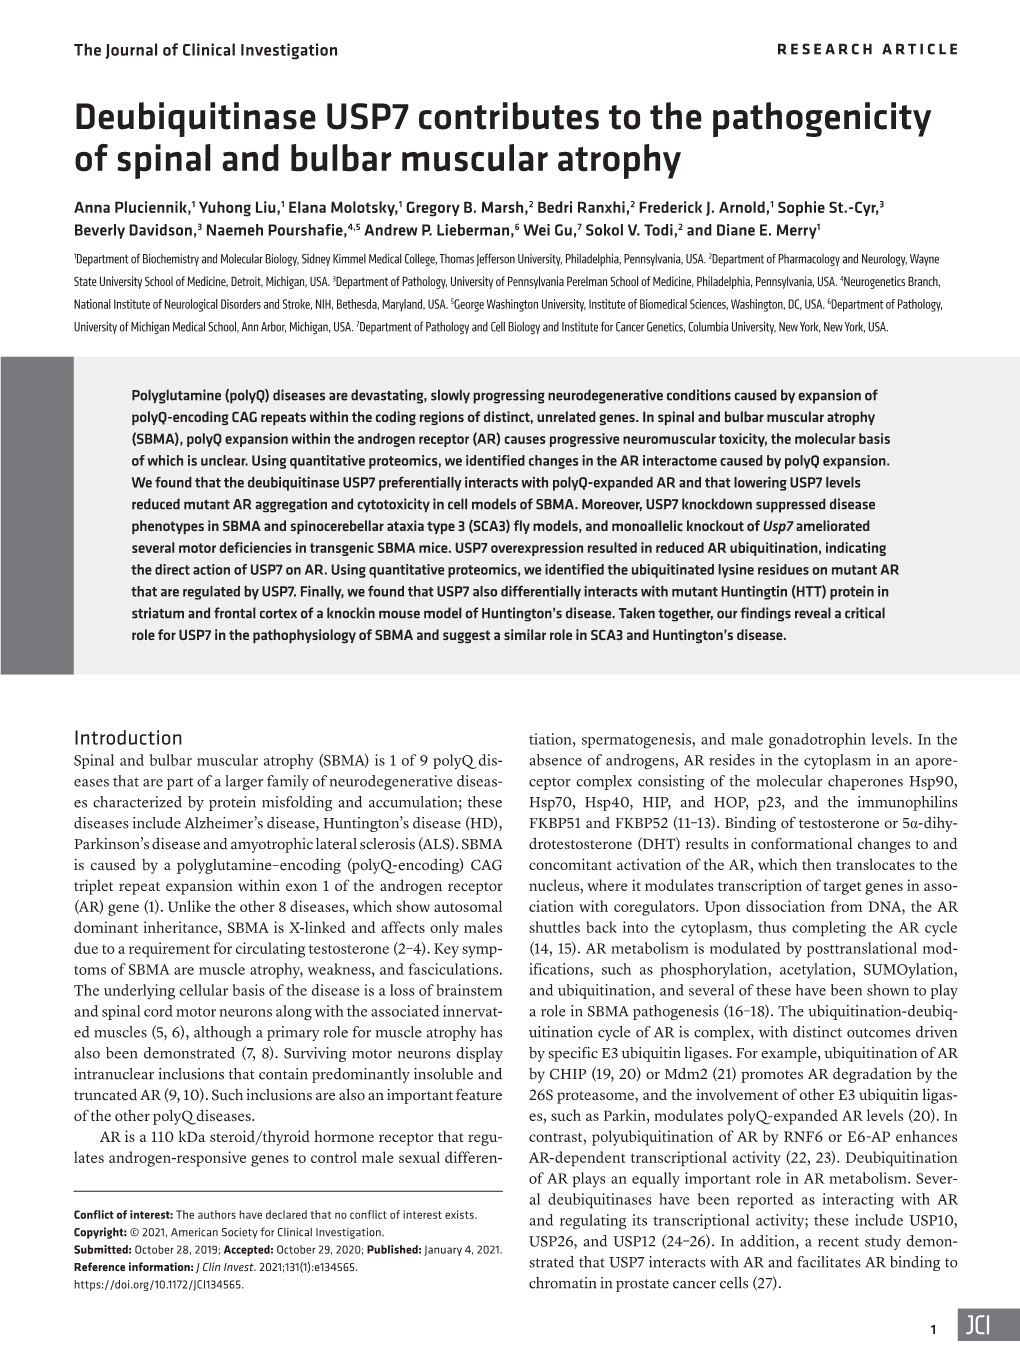 Deubiquitinase USP7 Contributes to the Pathogenicity of Spinal and Bulbar Muscular Atrophy